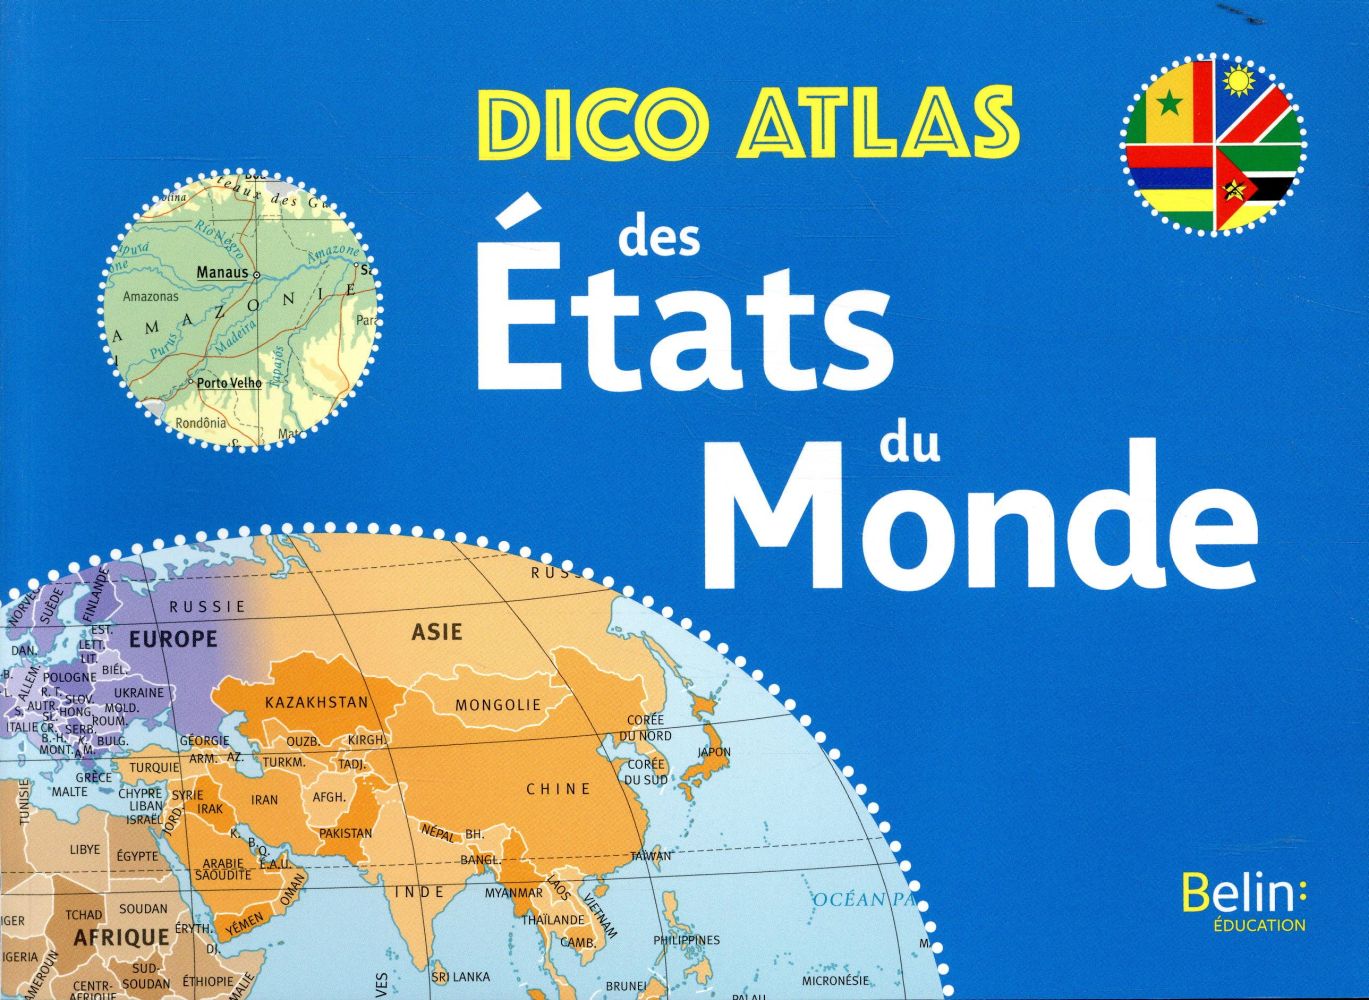 DICO ATLAS DES ETATS DU MONDE